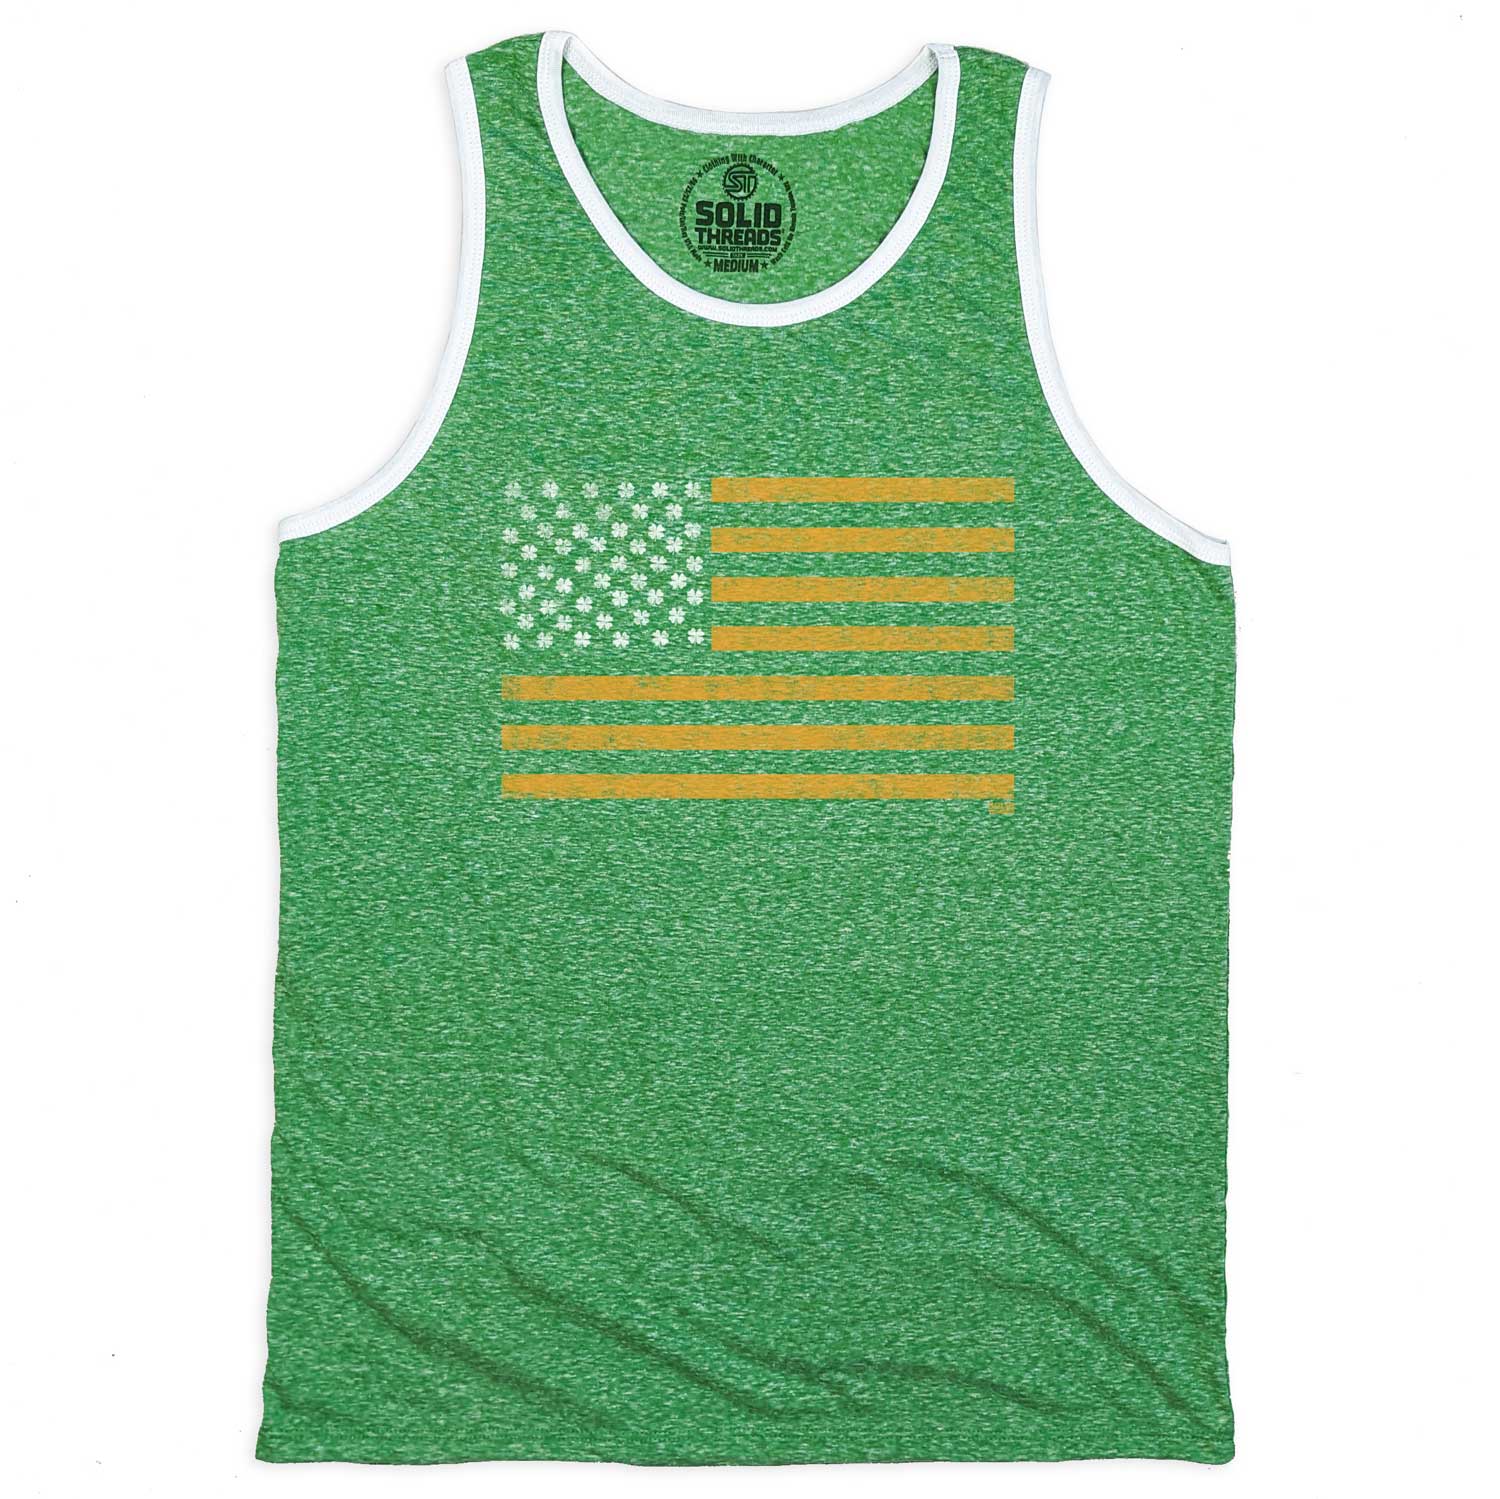 Men's Irish American Vintage Graphic Tank Top | Retro Irish T-shirt | Solid Threads